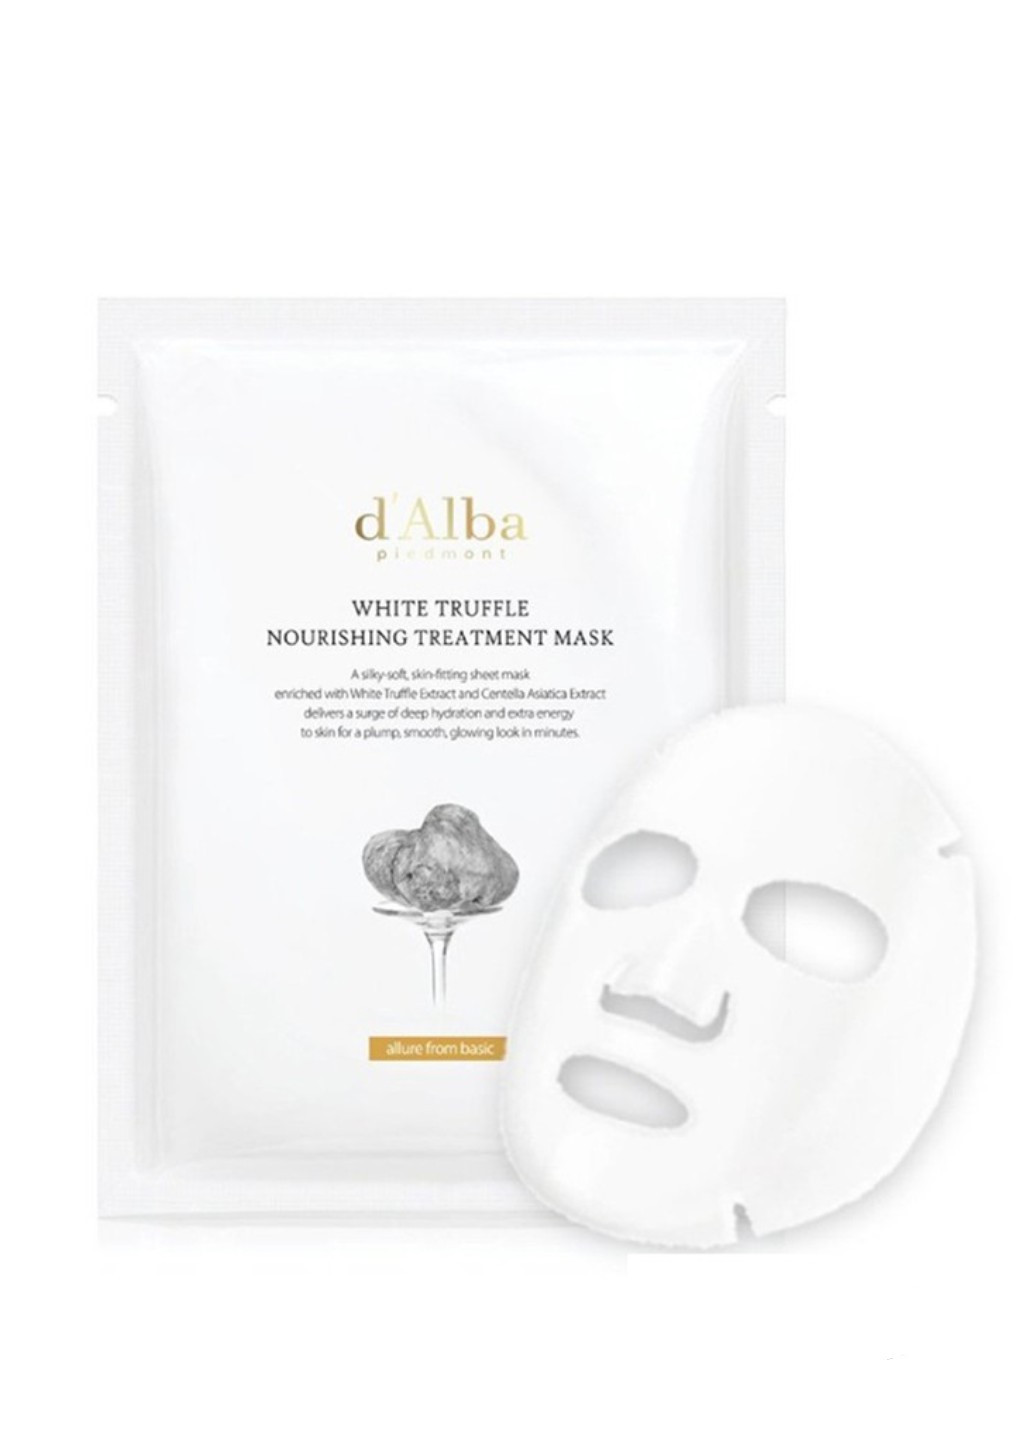 Маска WHITE TRUFFLE NOURISHING TREATMENT MASK питательная листовая маска с белым трюфелем D'ALBA (252635355)